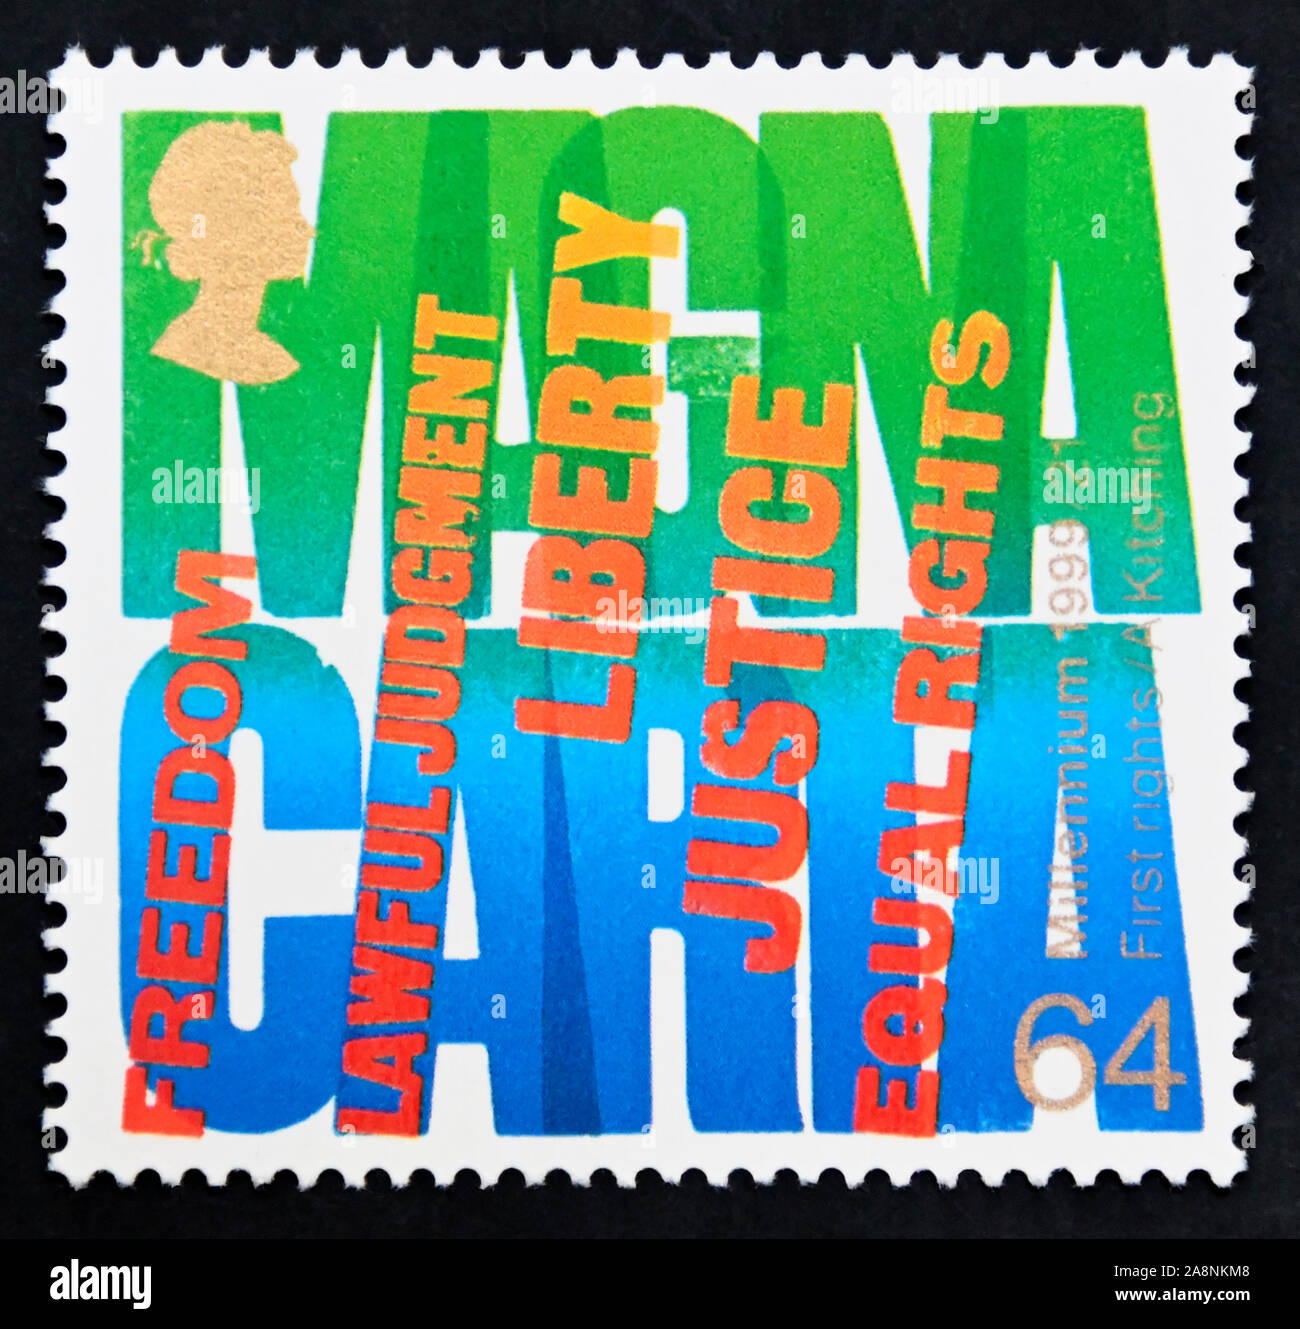 Postage stamp. Great Britain. Queen Elizabeth II. Millennium Series. The Citizen's Tale. MAGNA CARTA (Human Rights). 64p. Stock Photo